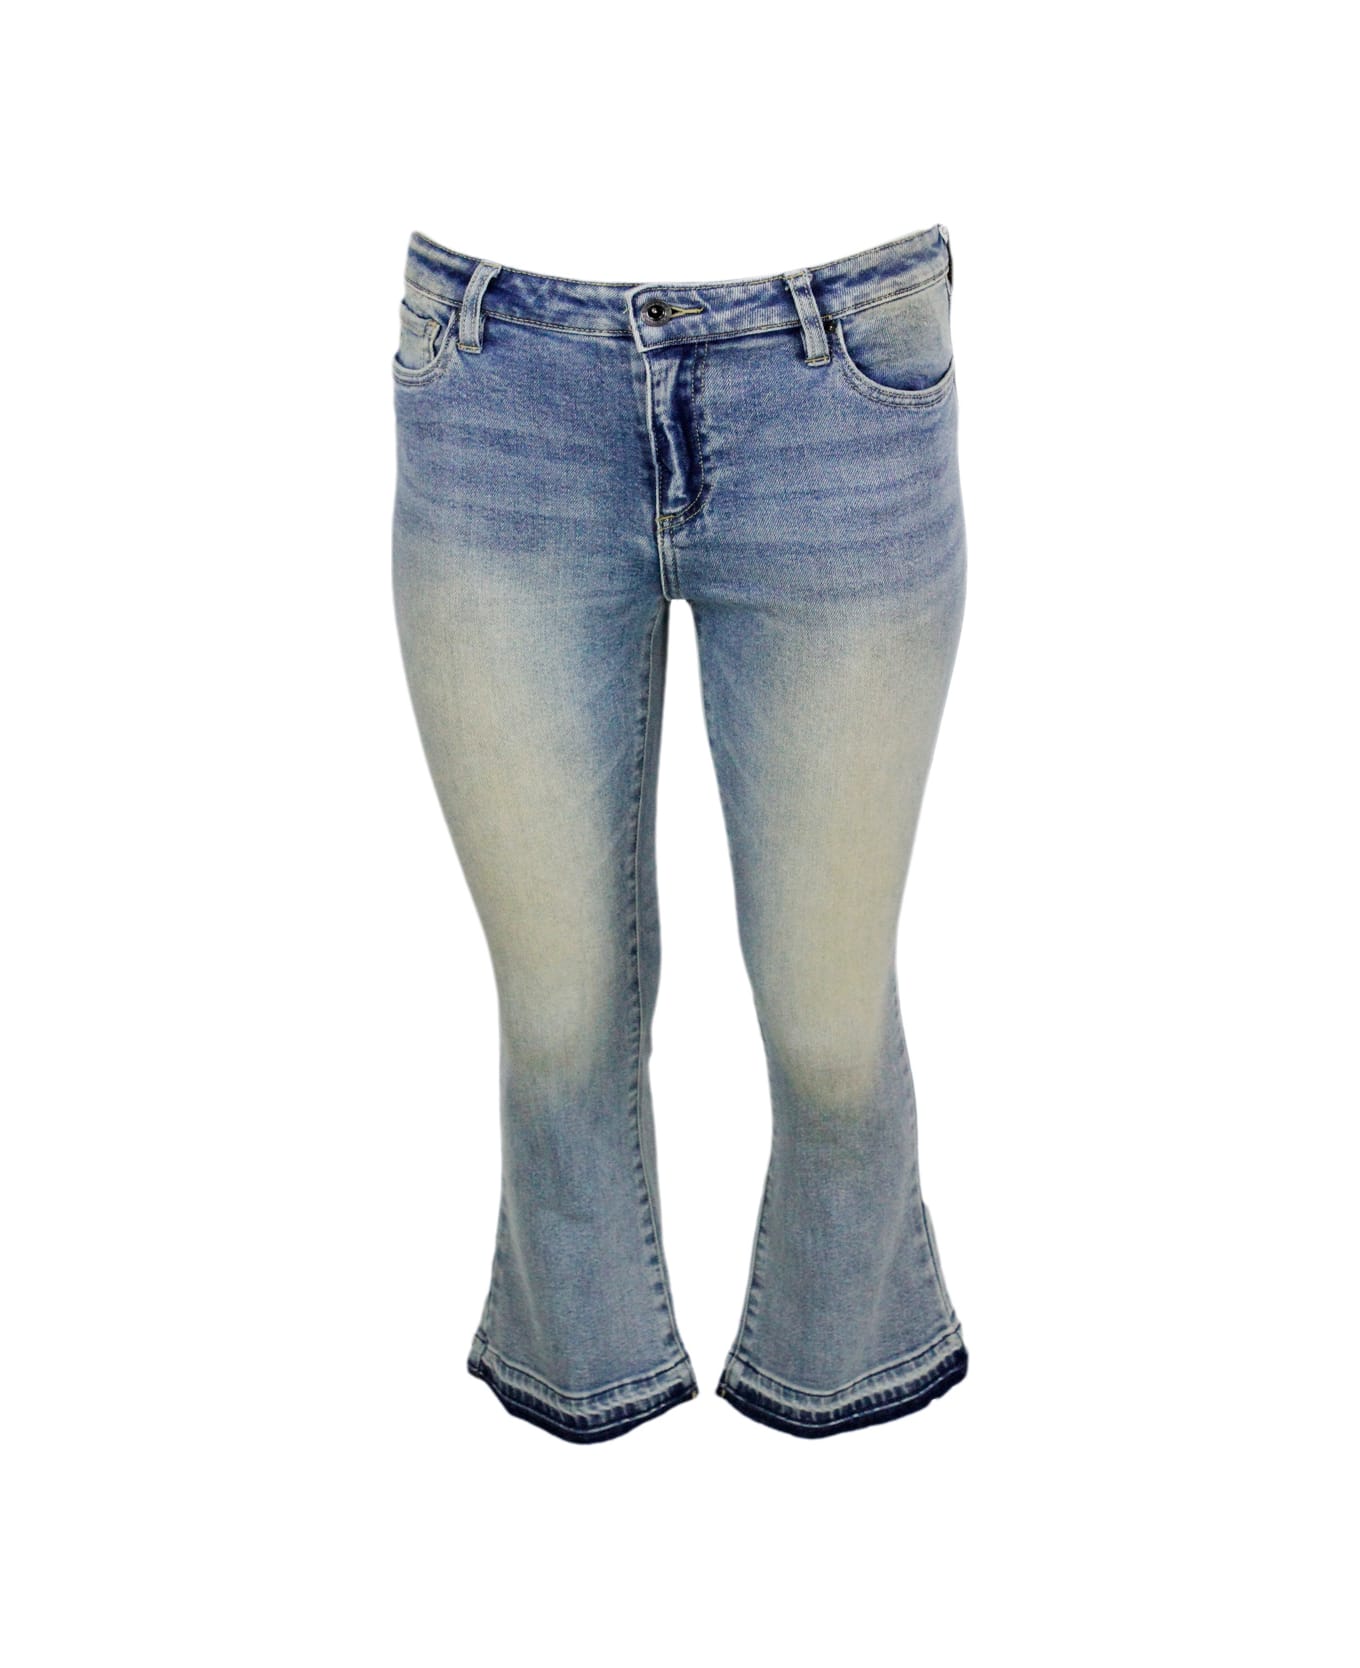 Armani Collezioni Stretch Jeans In Vintage Effect Denim Flare Capri Model With Fringed Trumpet Bottom. - Denim